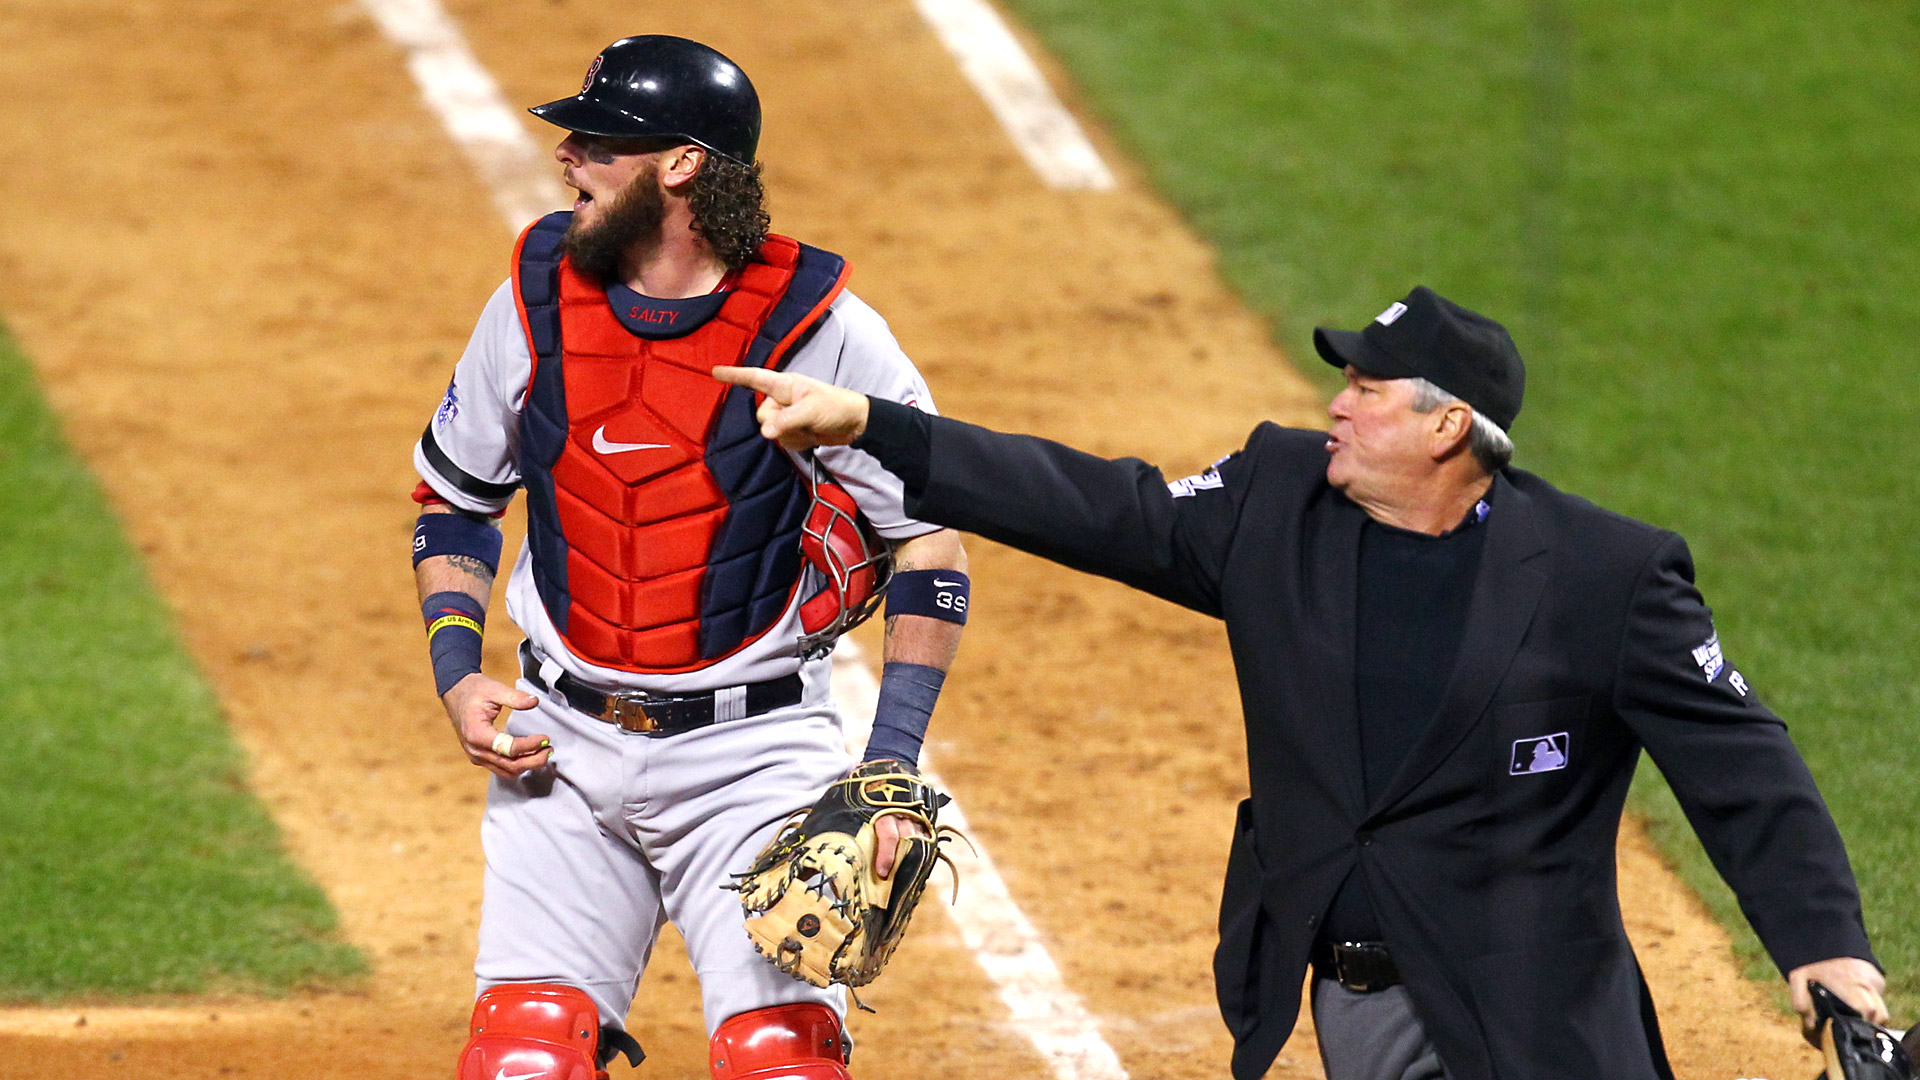 Sox face tough decision on Saltalamacchia, Sports